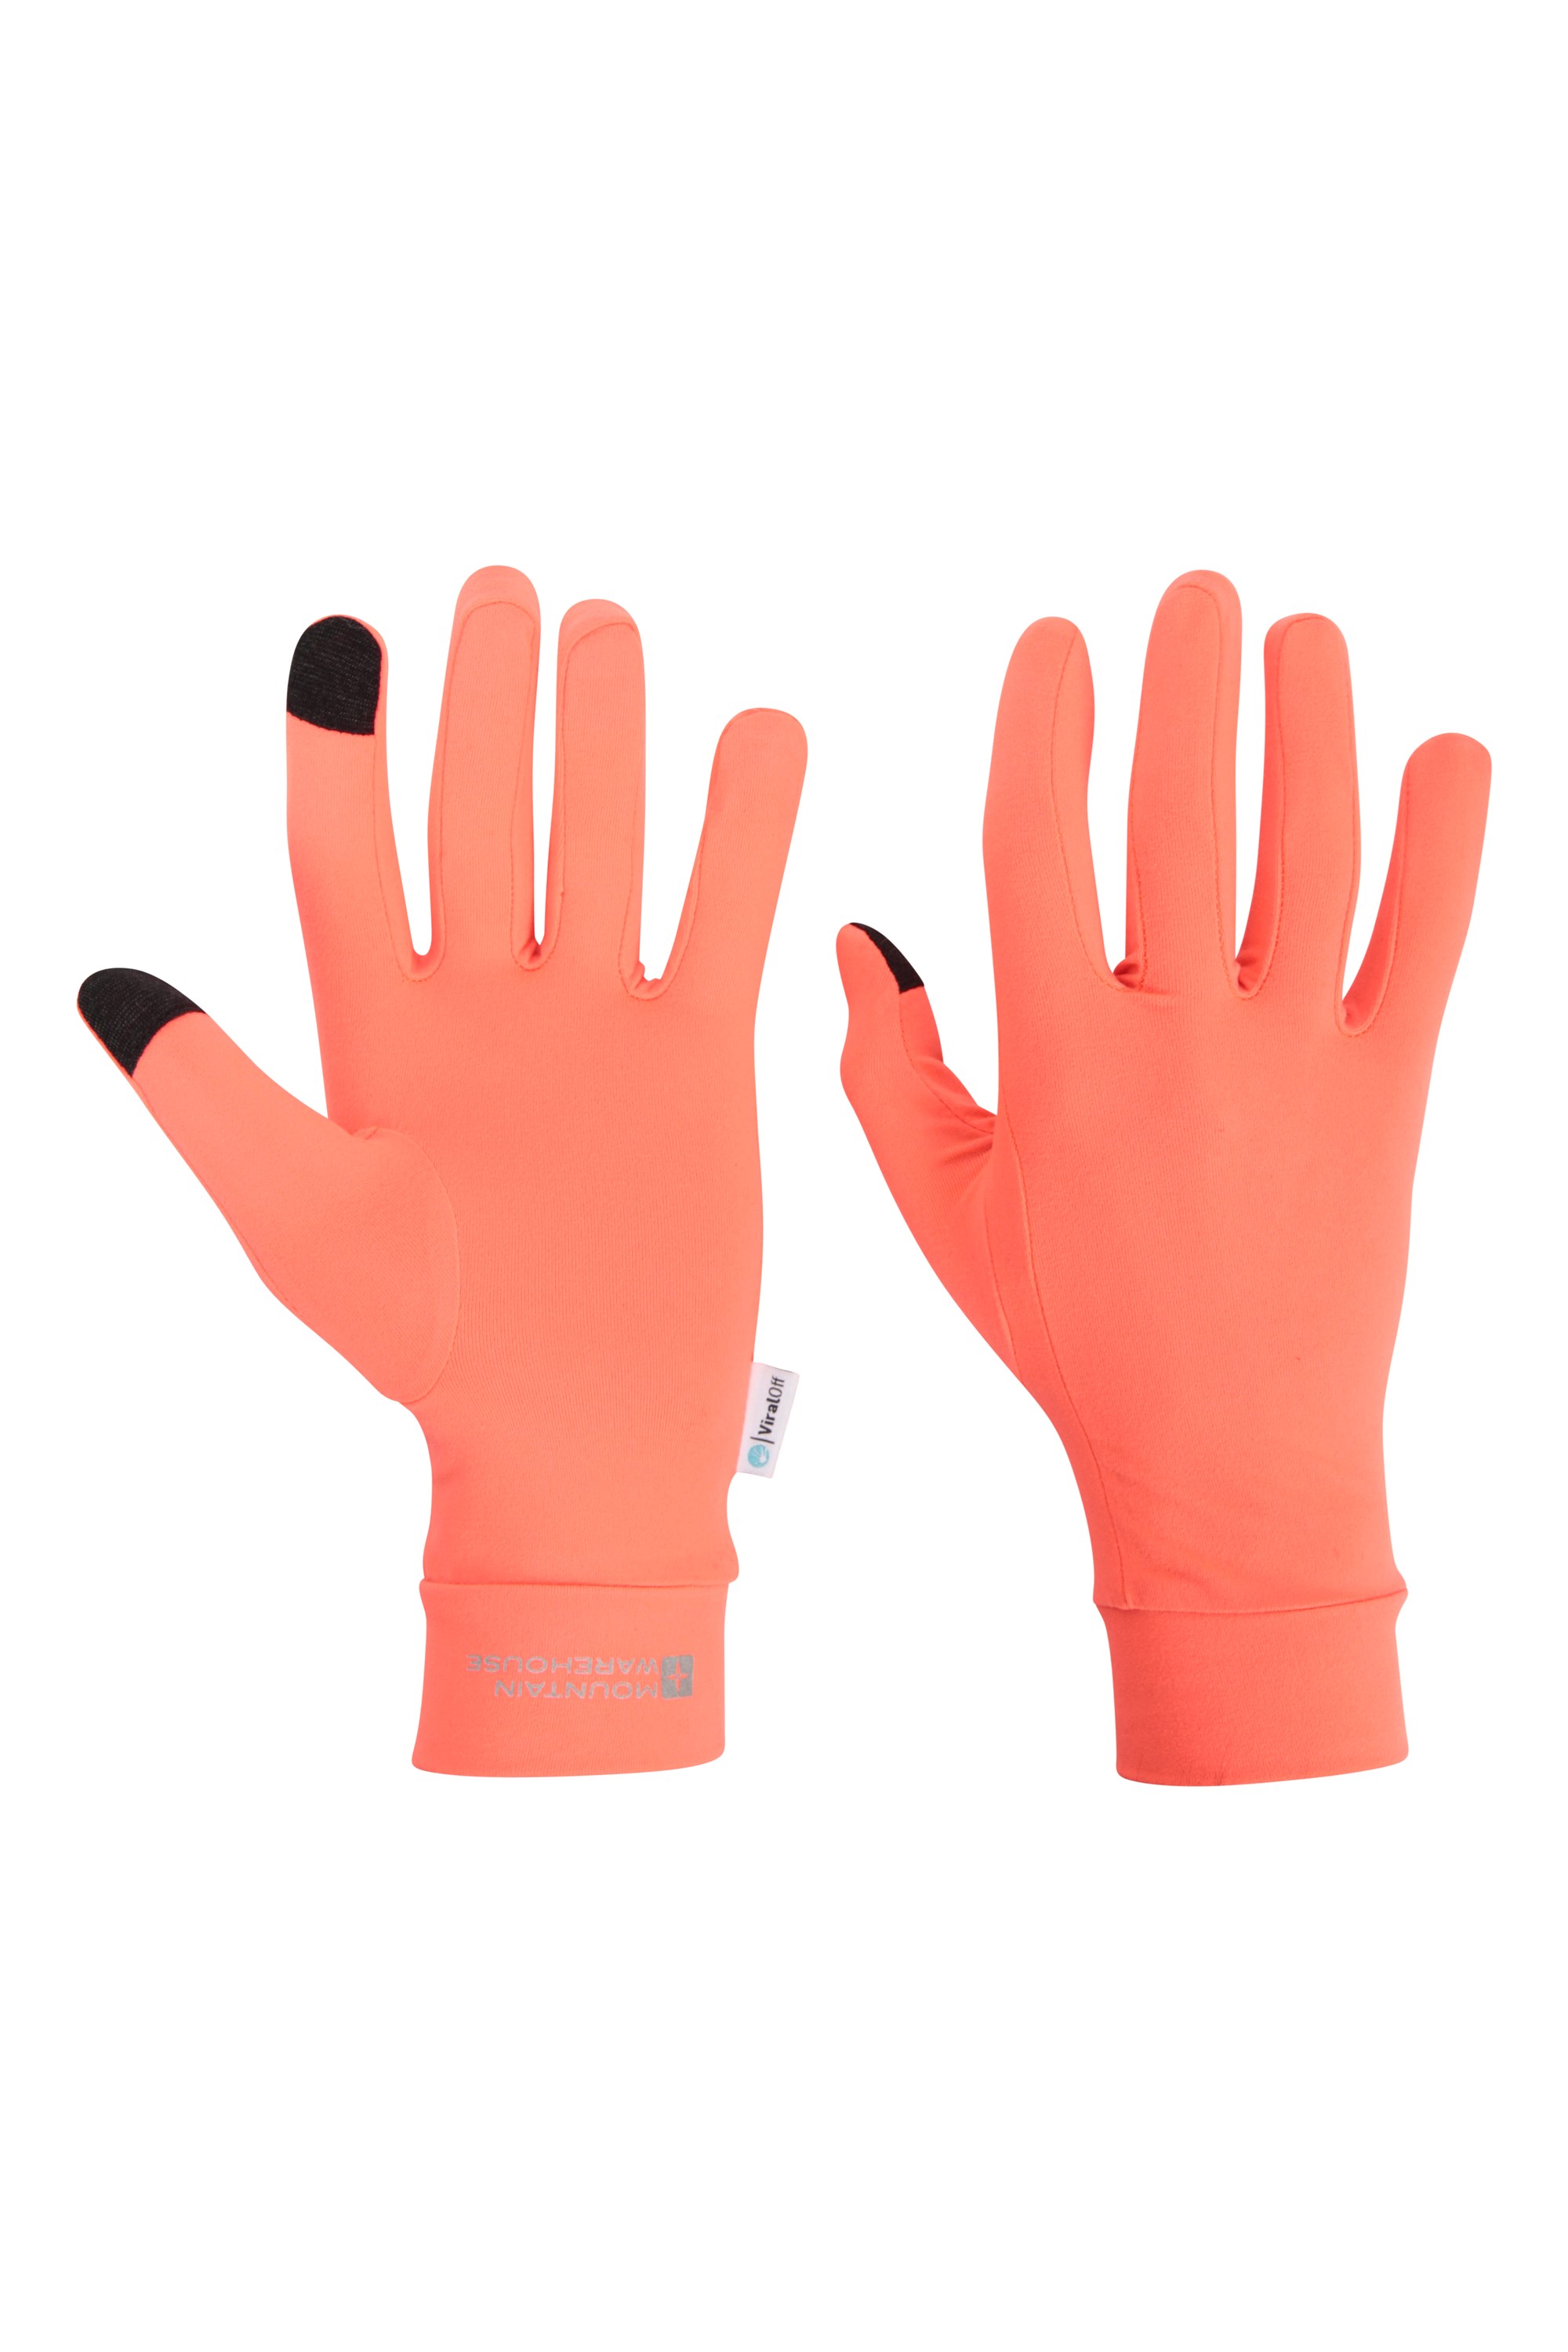 Mountain Warehouse Universal Fingerless Fishing Gloves - Grey | Size L